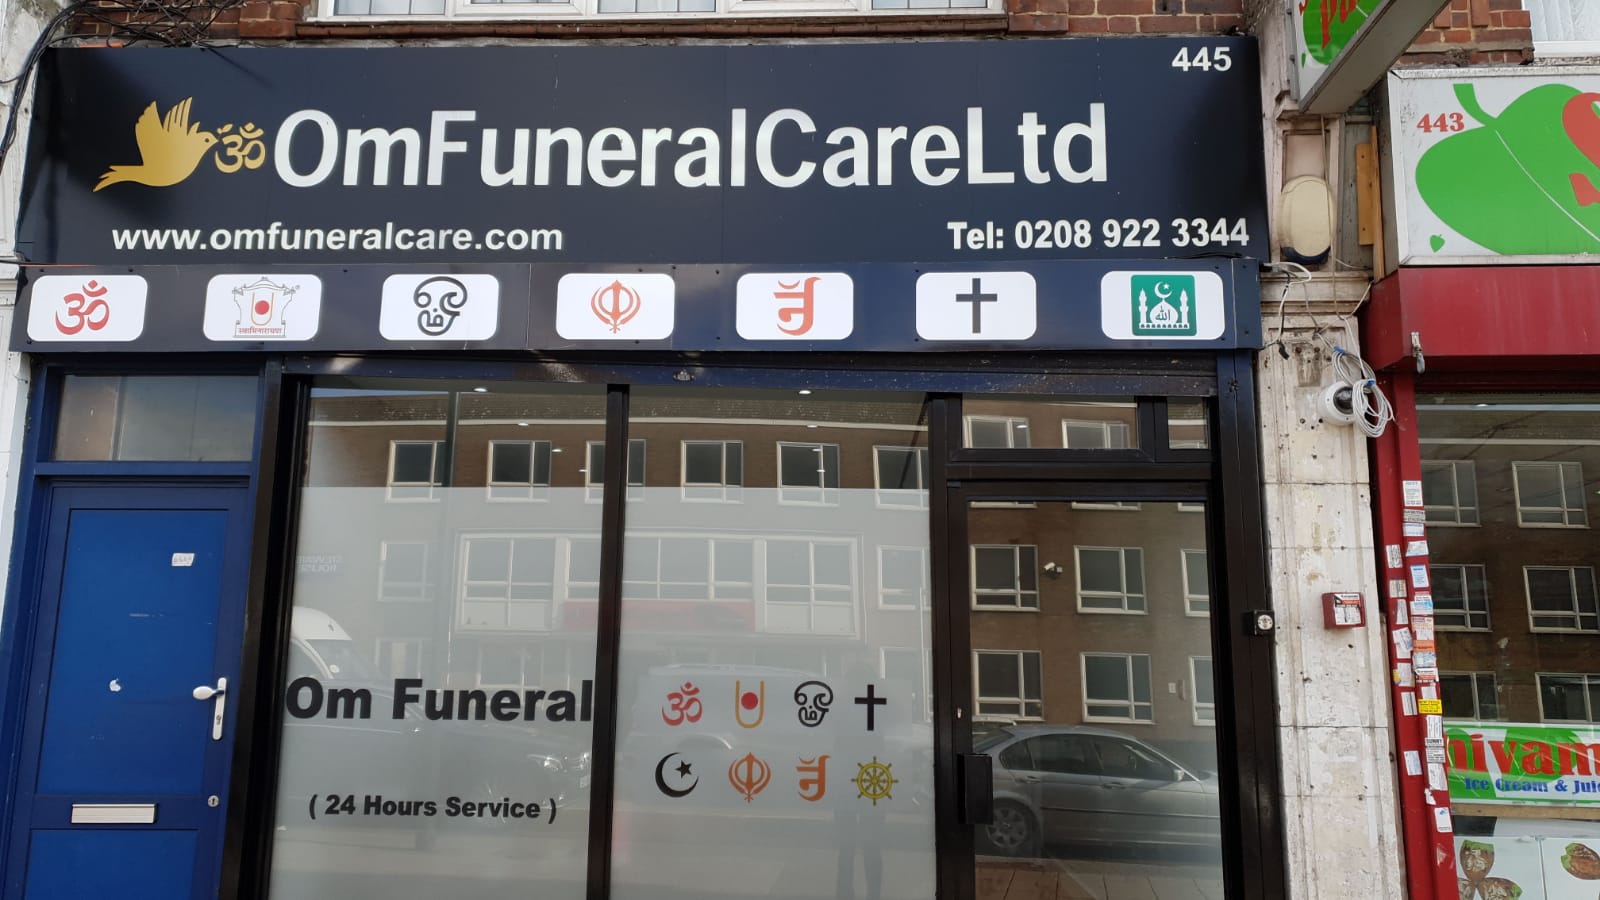 Om Funeral Care Ltd Harrow 020 8922 3344